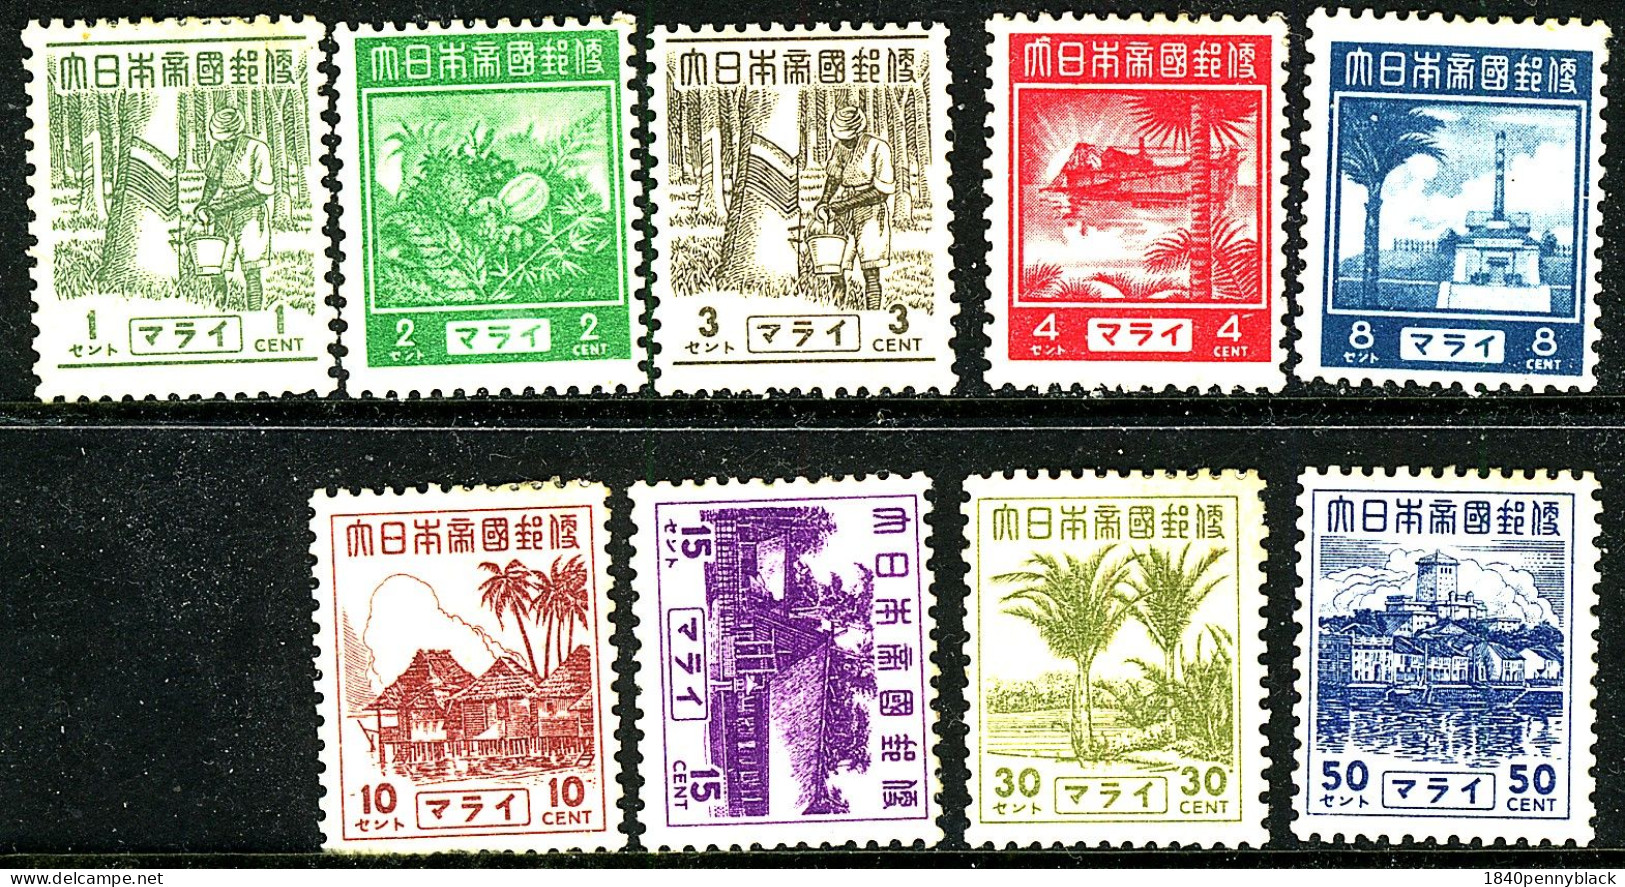 JAPANESE OCCUPATION OF MALAYA 1943 Definitives To 50c J297-305 9v Mounted Mint - Japanese Occupation